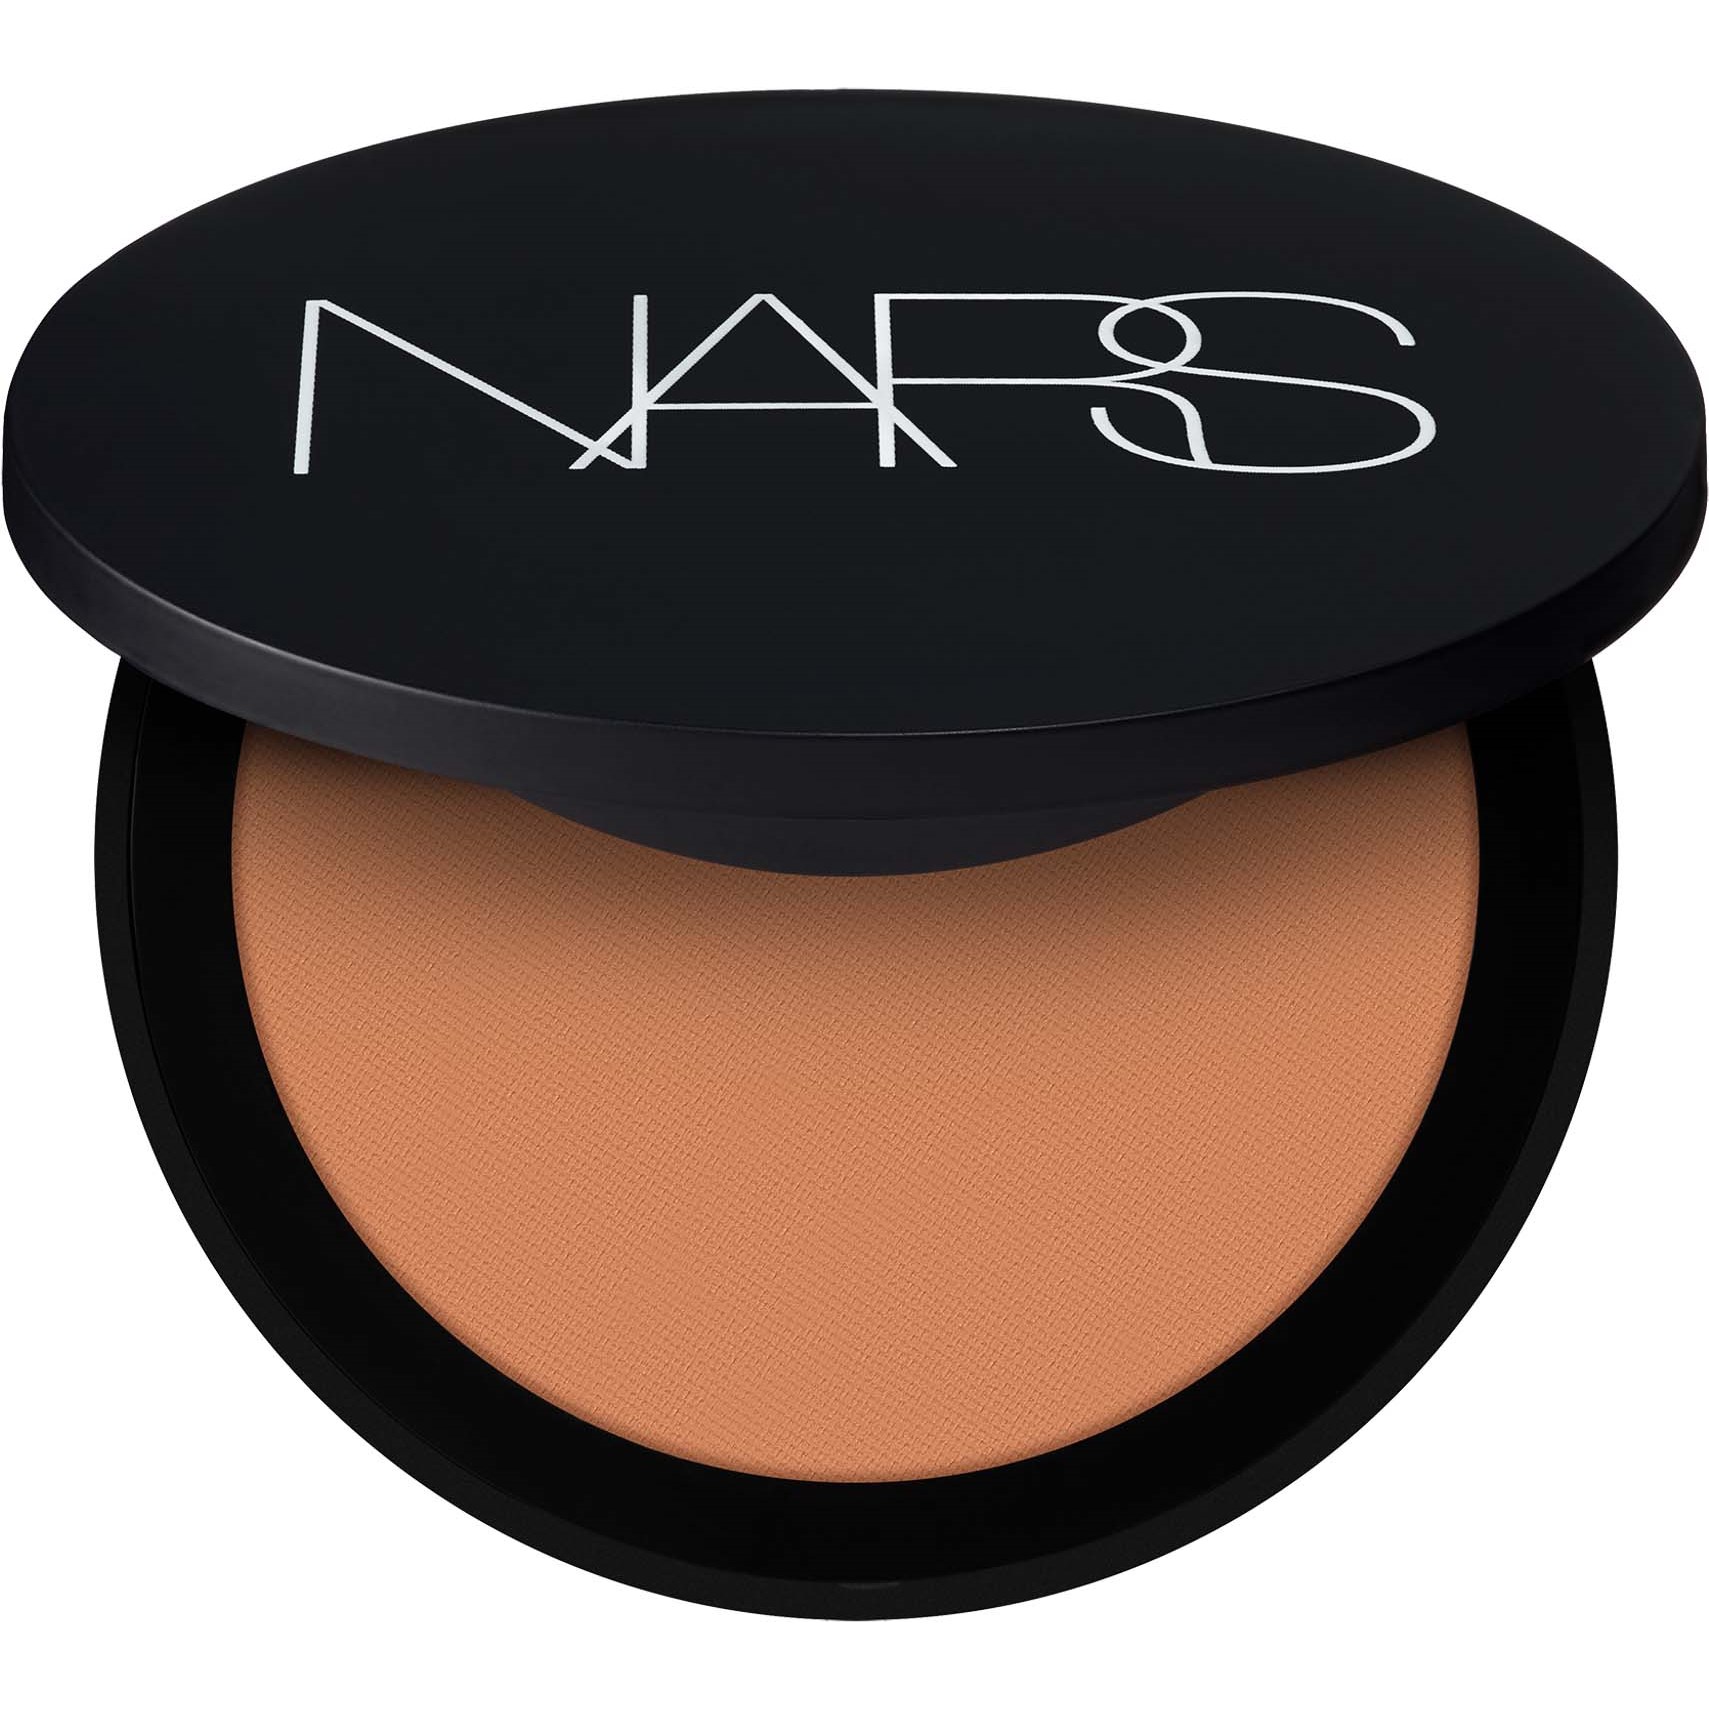 NARS Soft Matte Advanced Perfecting Powder Offshore